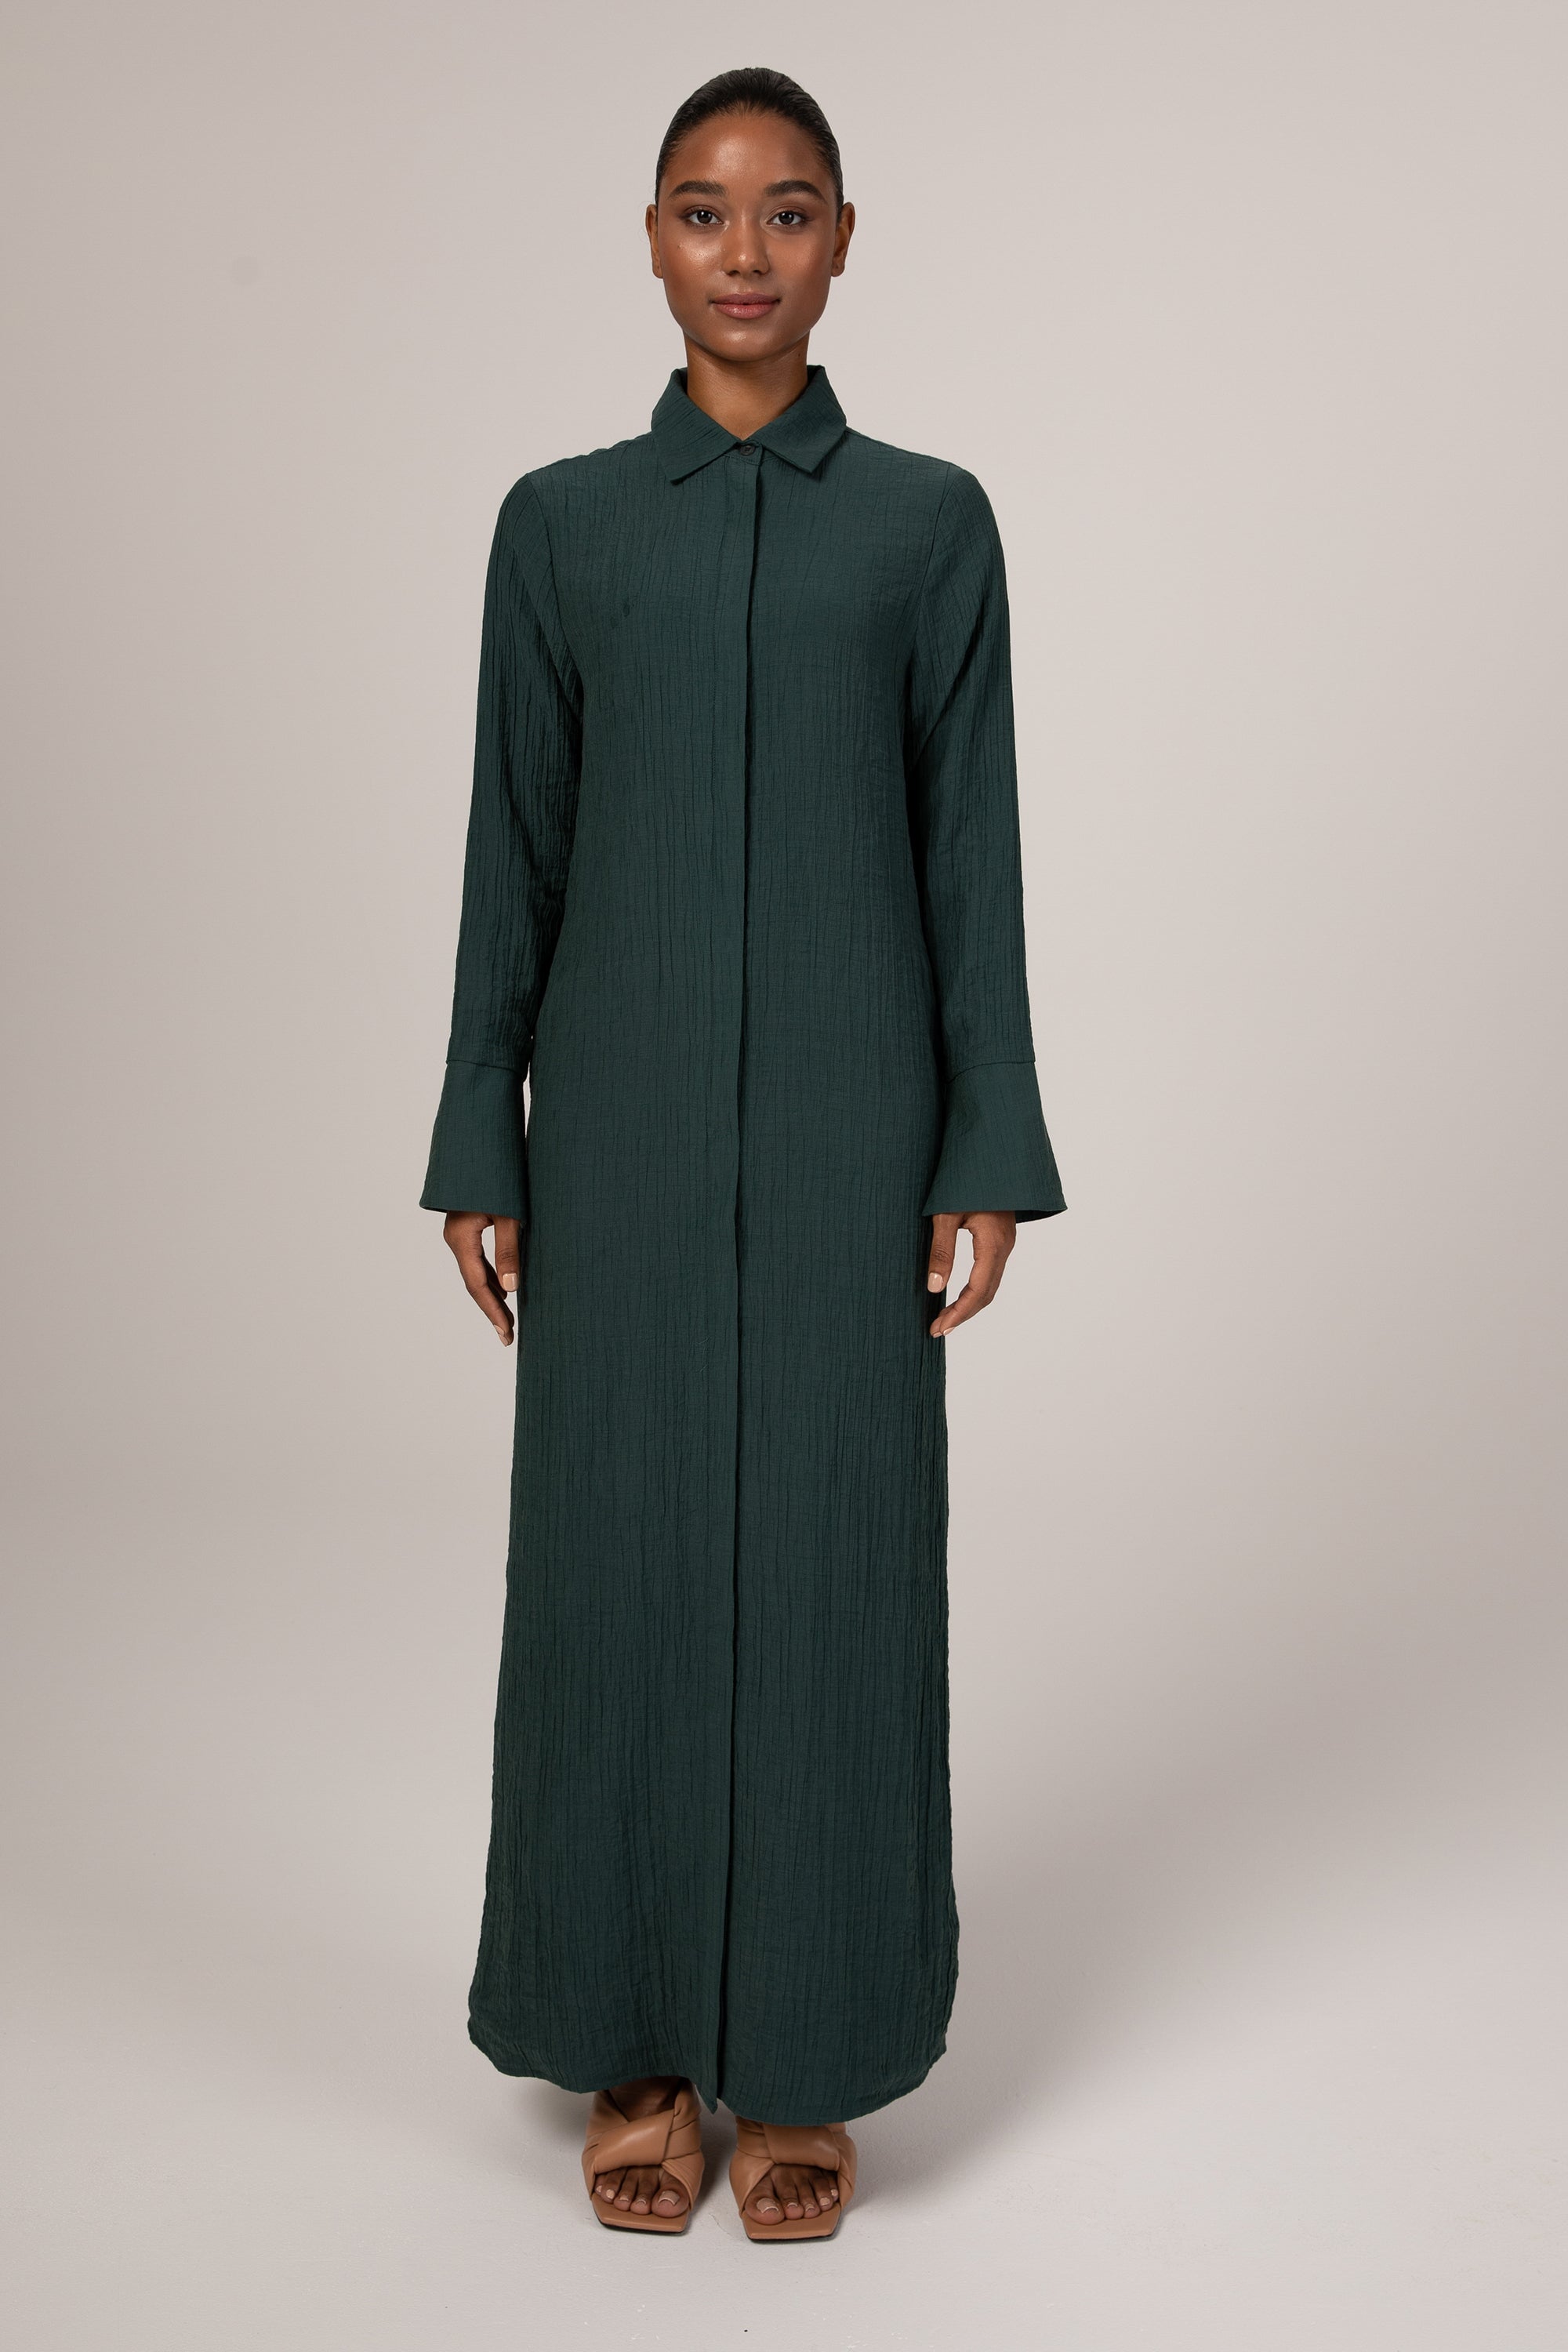 Louiza Textured Button Down Maxi Dress - Deep Teal Veiled Collection 